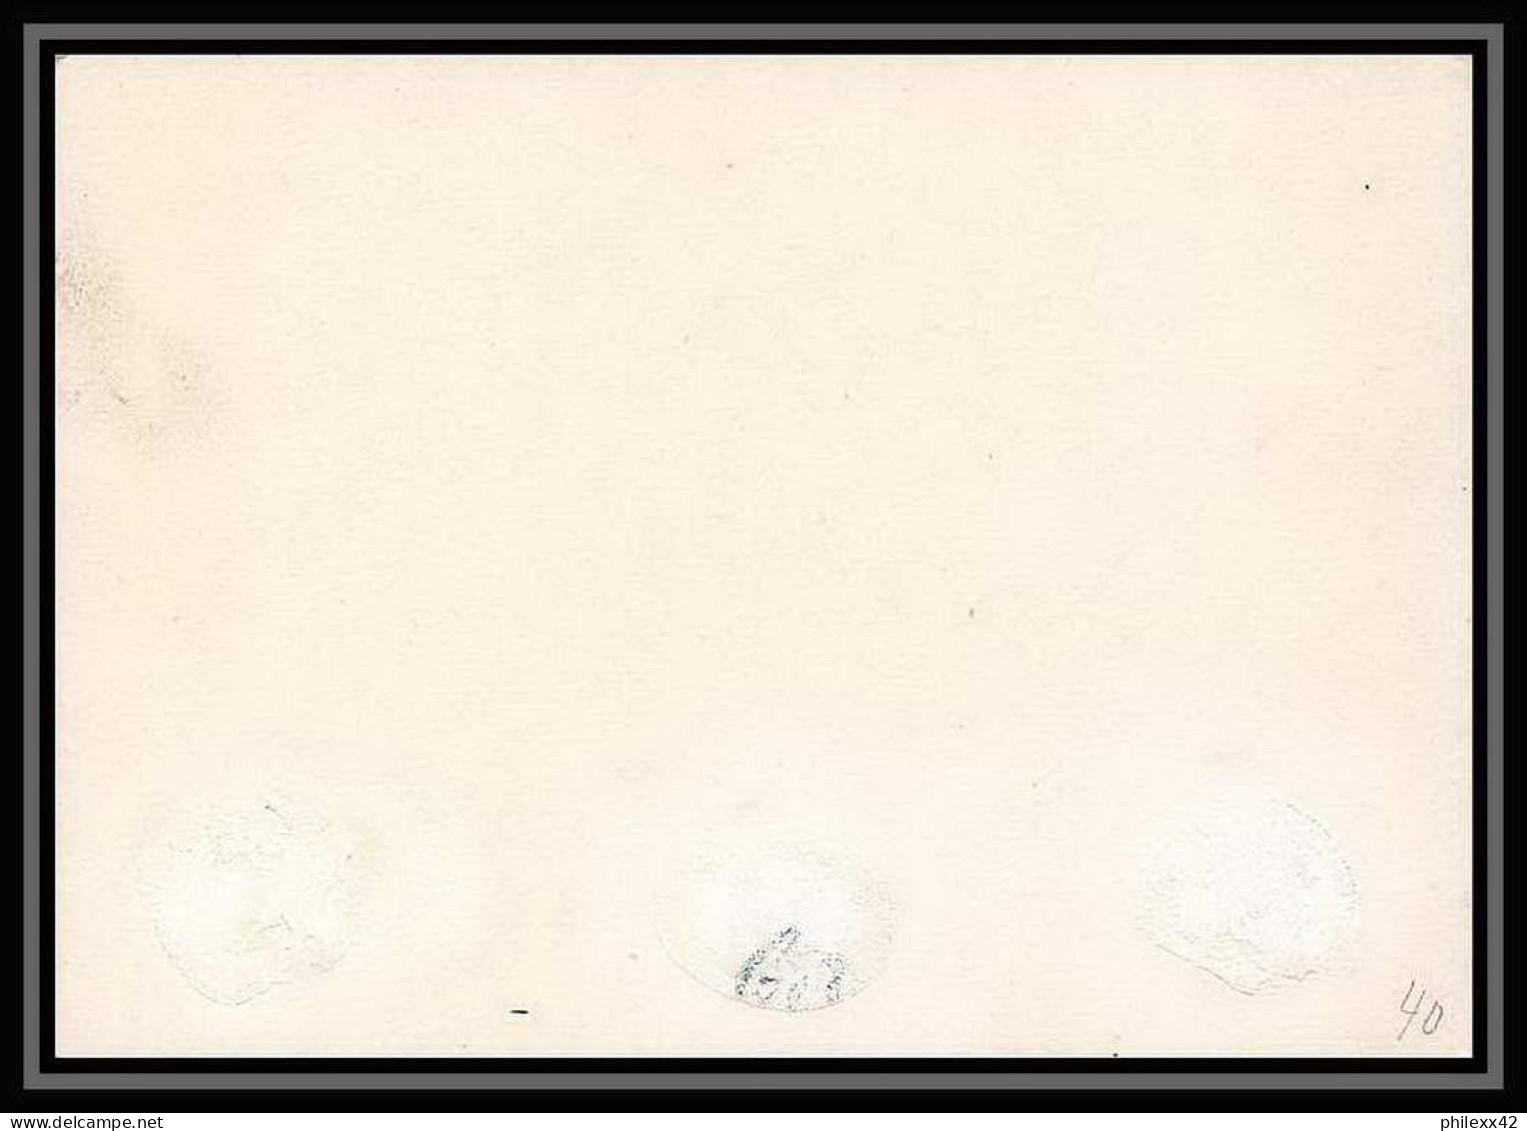 4054/ Brésil (brazil) Entier Stationery Carte Postale (postcard) N°10 Neuf (mint) 1883 - Entiers Postaux